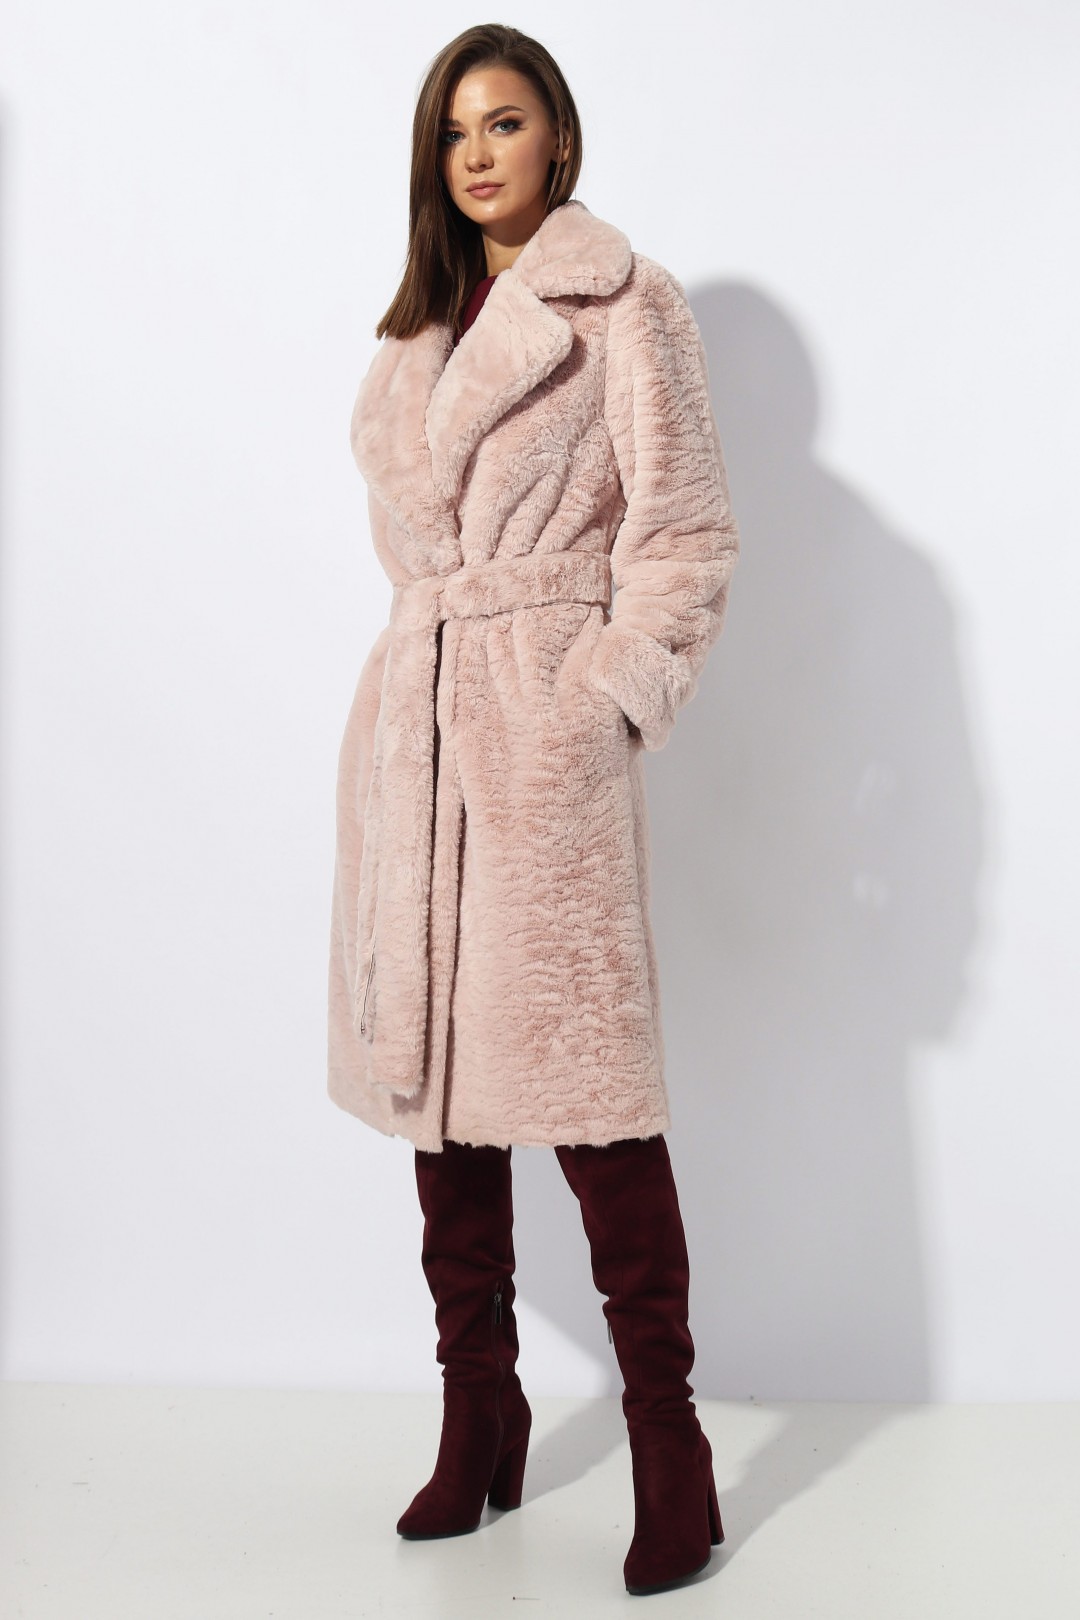   Пальто МиА-Мода  1194-1 розовый